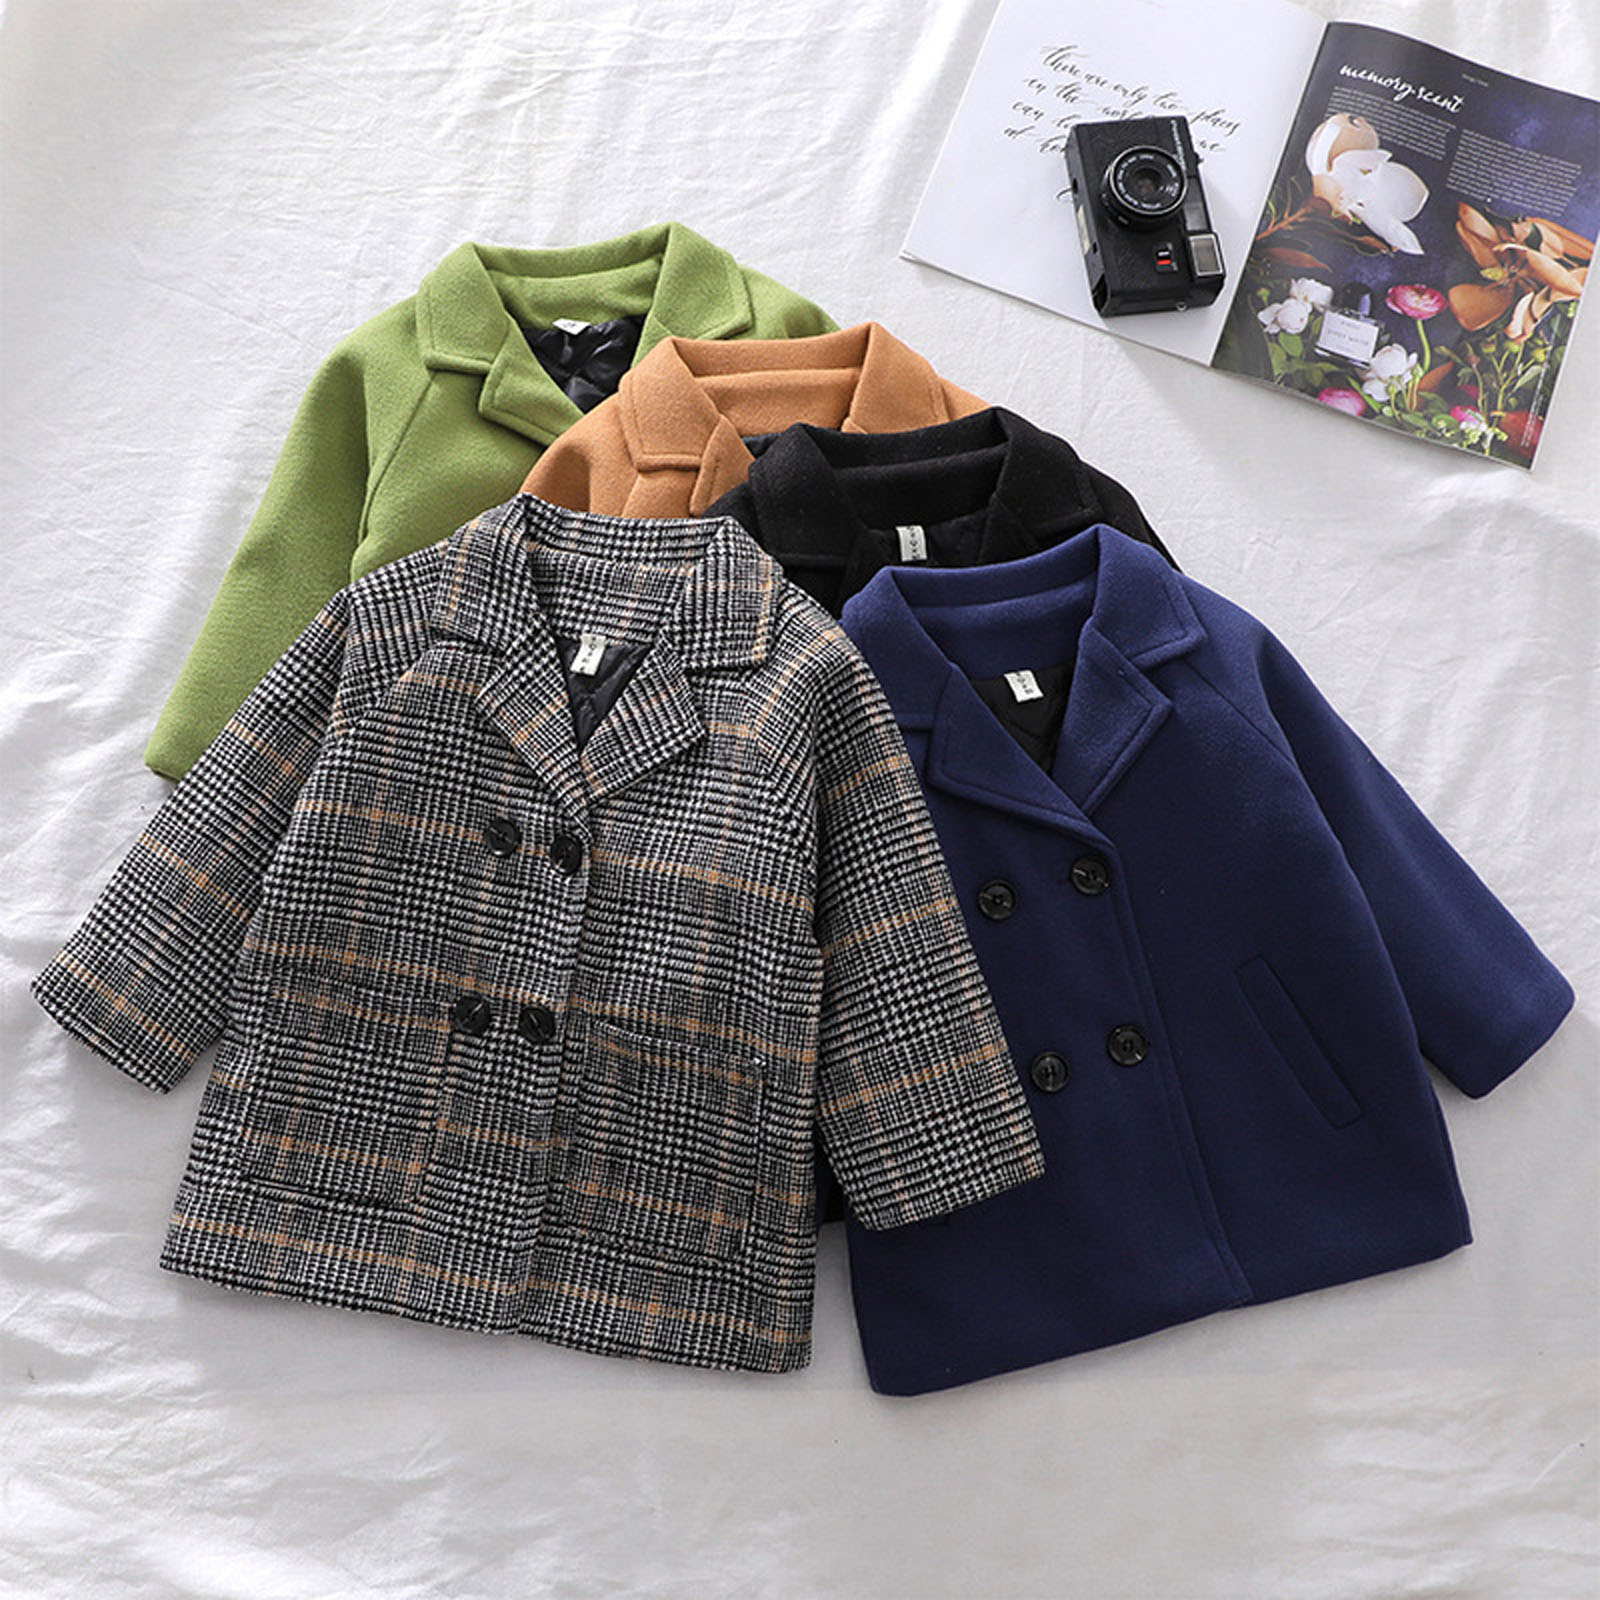 Meihuid Baby Boys Girls Wool Coat Winter Warm Double Breasted Trench Coat Jacket Outwear - image 4 of 6